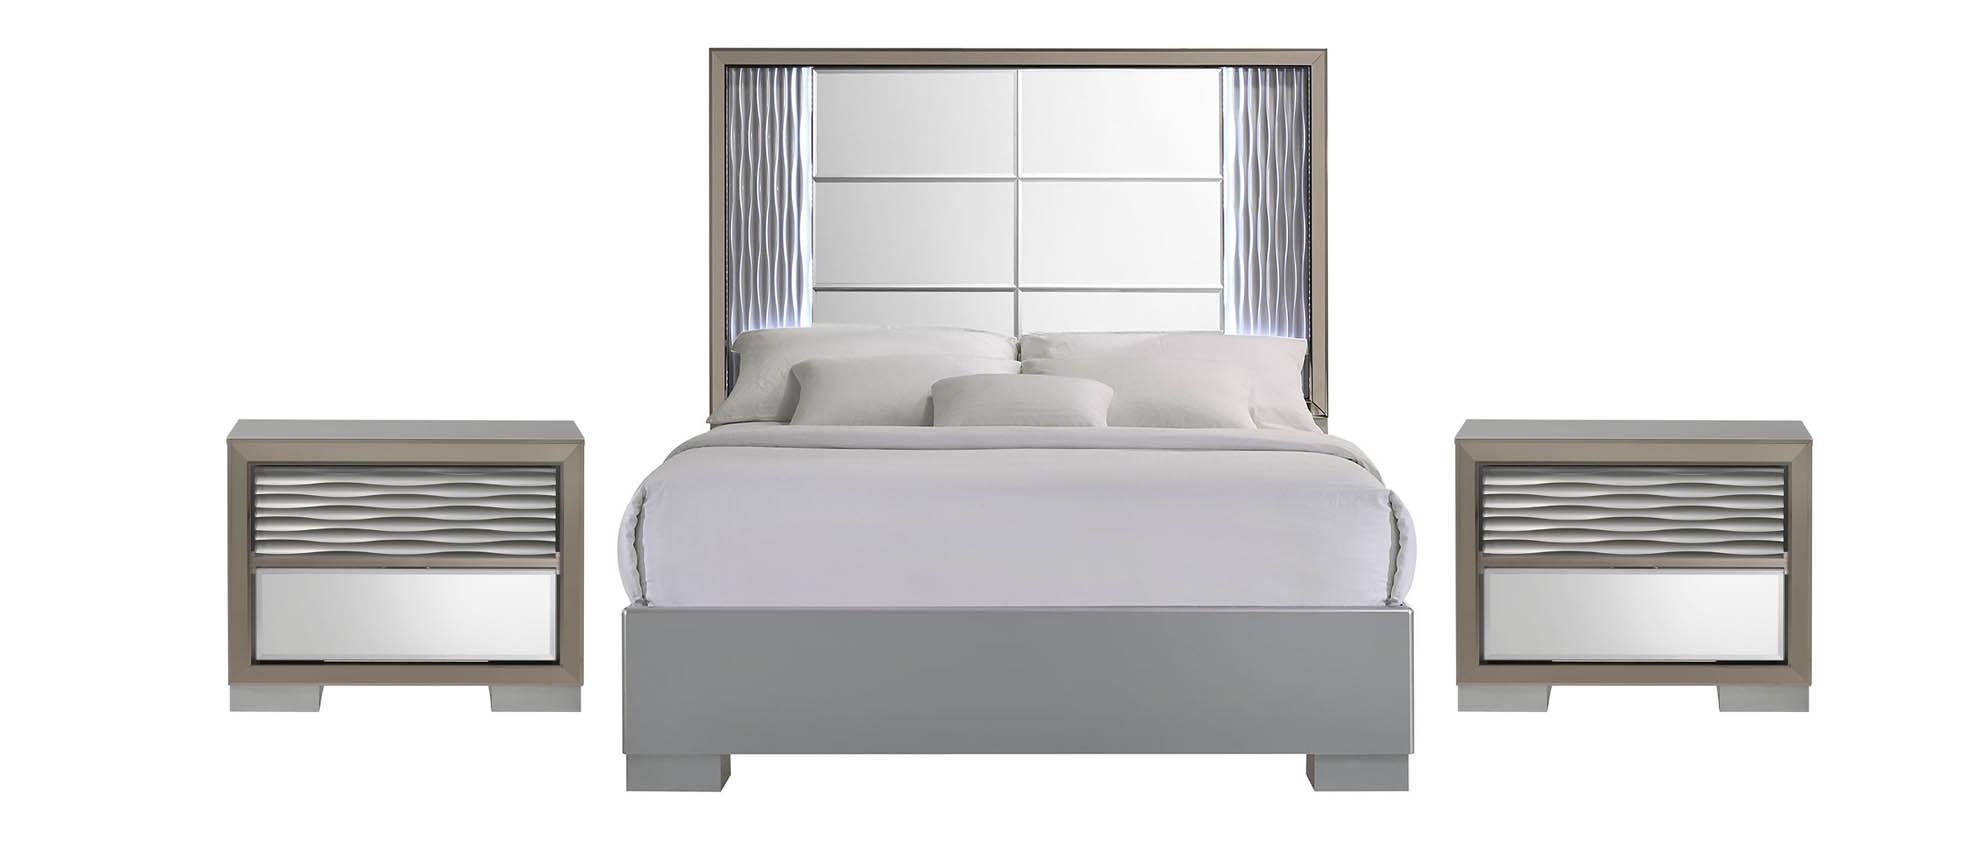 Contemporary Platform Bedroom Set SKYLINE SKYLINE-SILVER-QB-Set-3 in Mirrored, Silver 